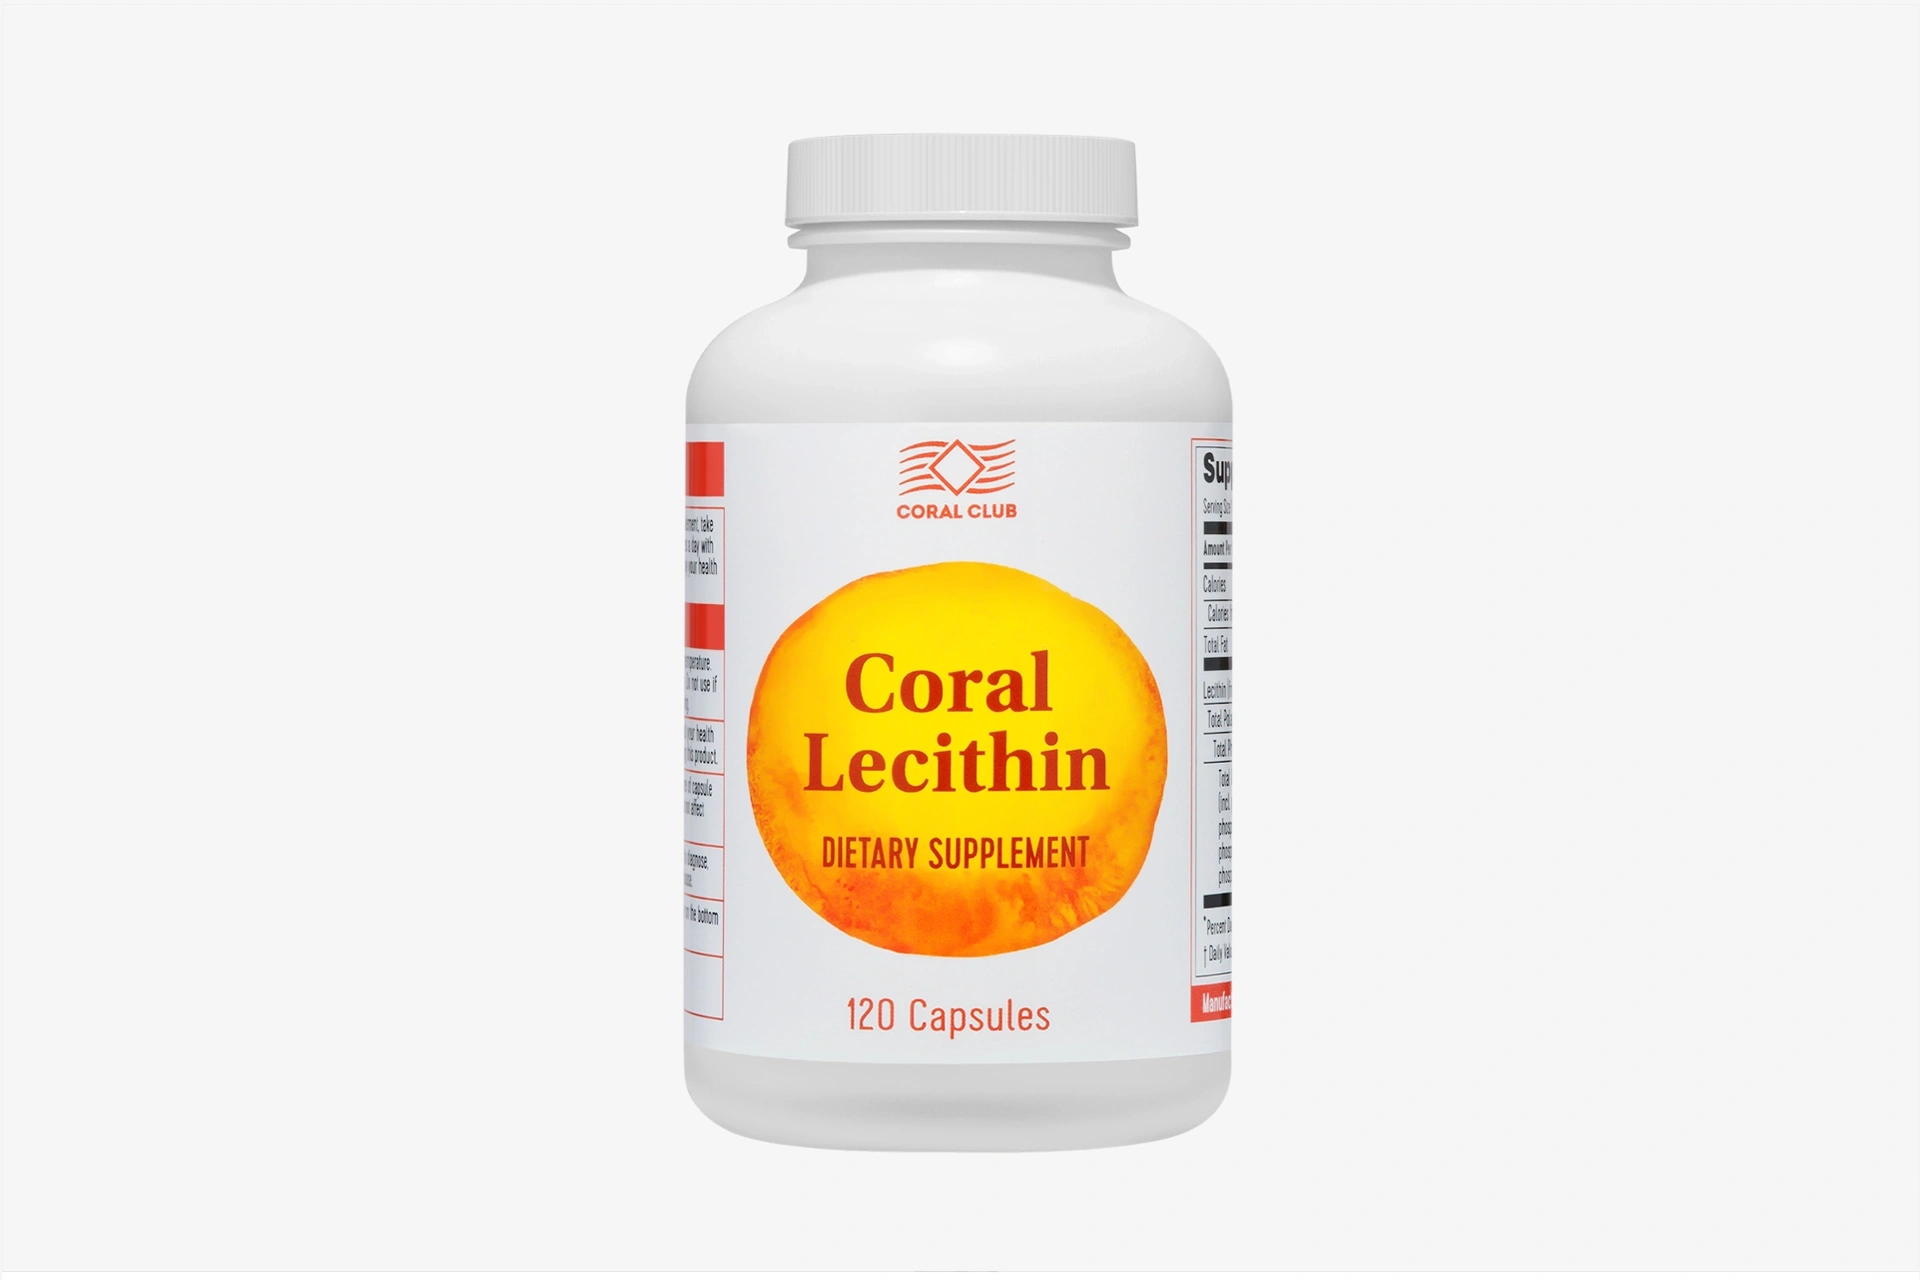 Корал Лецитин